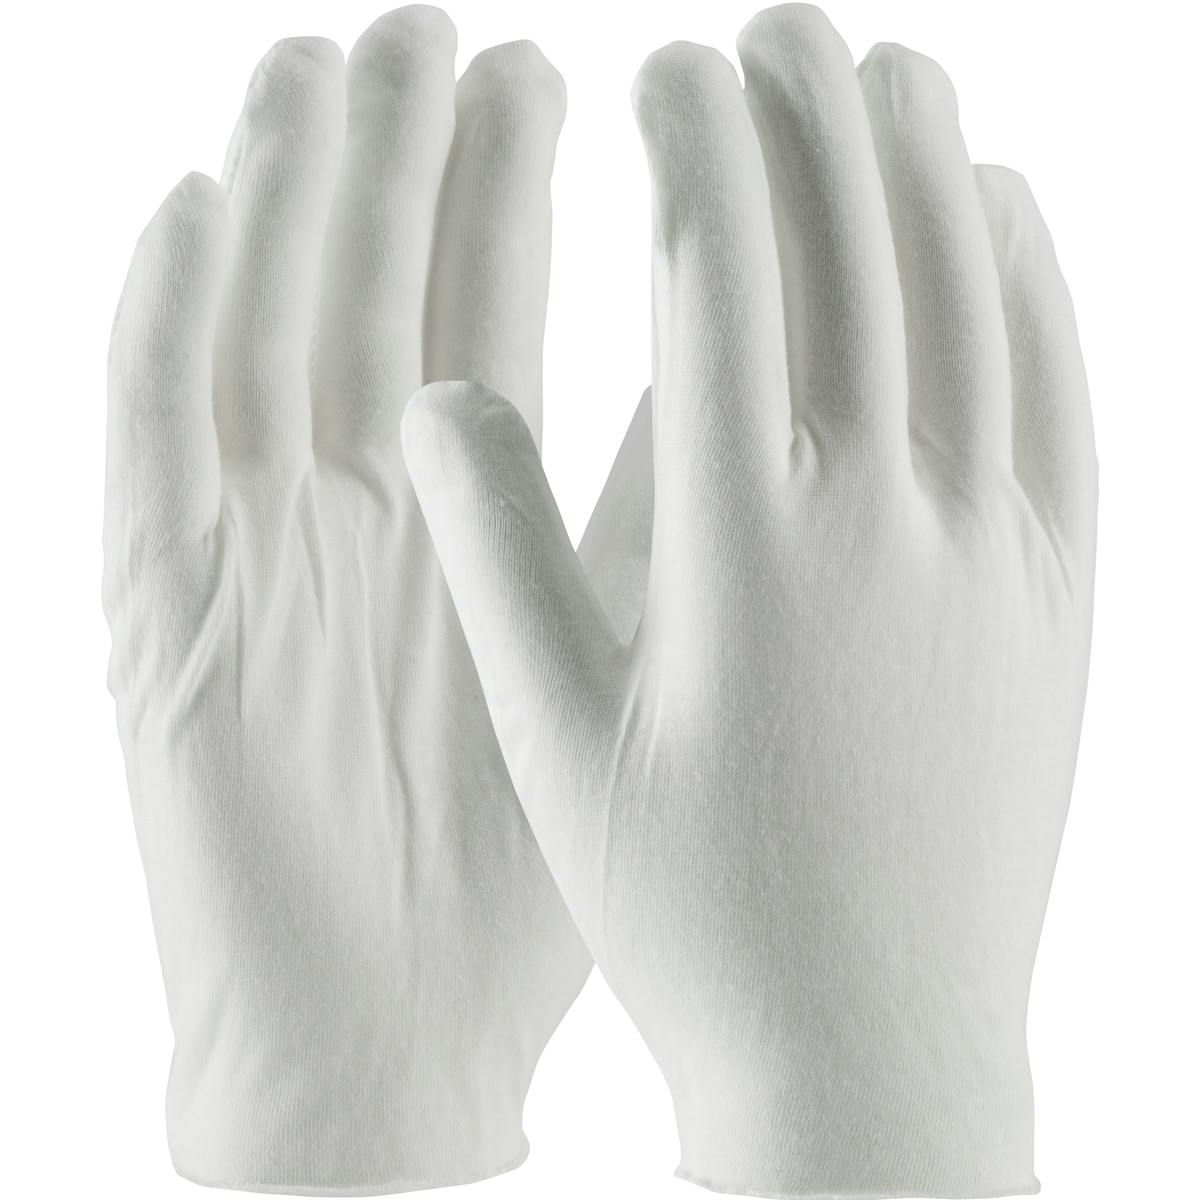 Medium Weight Cotton Lisle Inspection Glove with Unhemmed Cuff - Jumbo Size, White (97-520J) - MENS